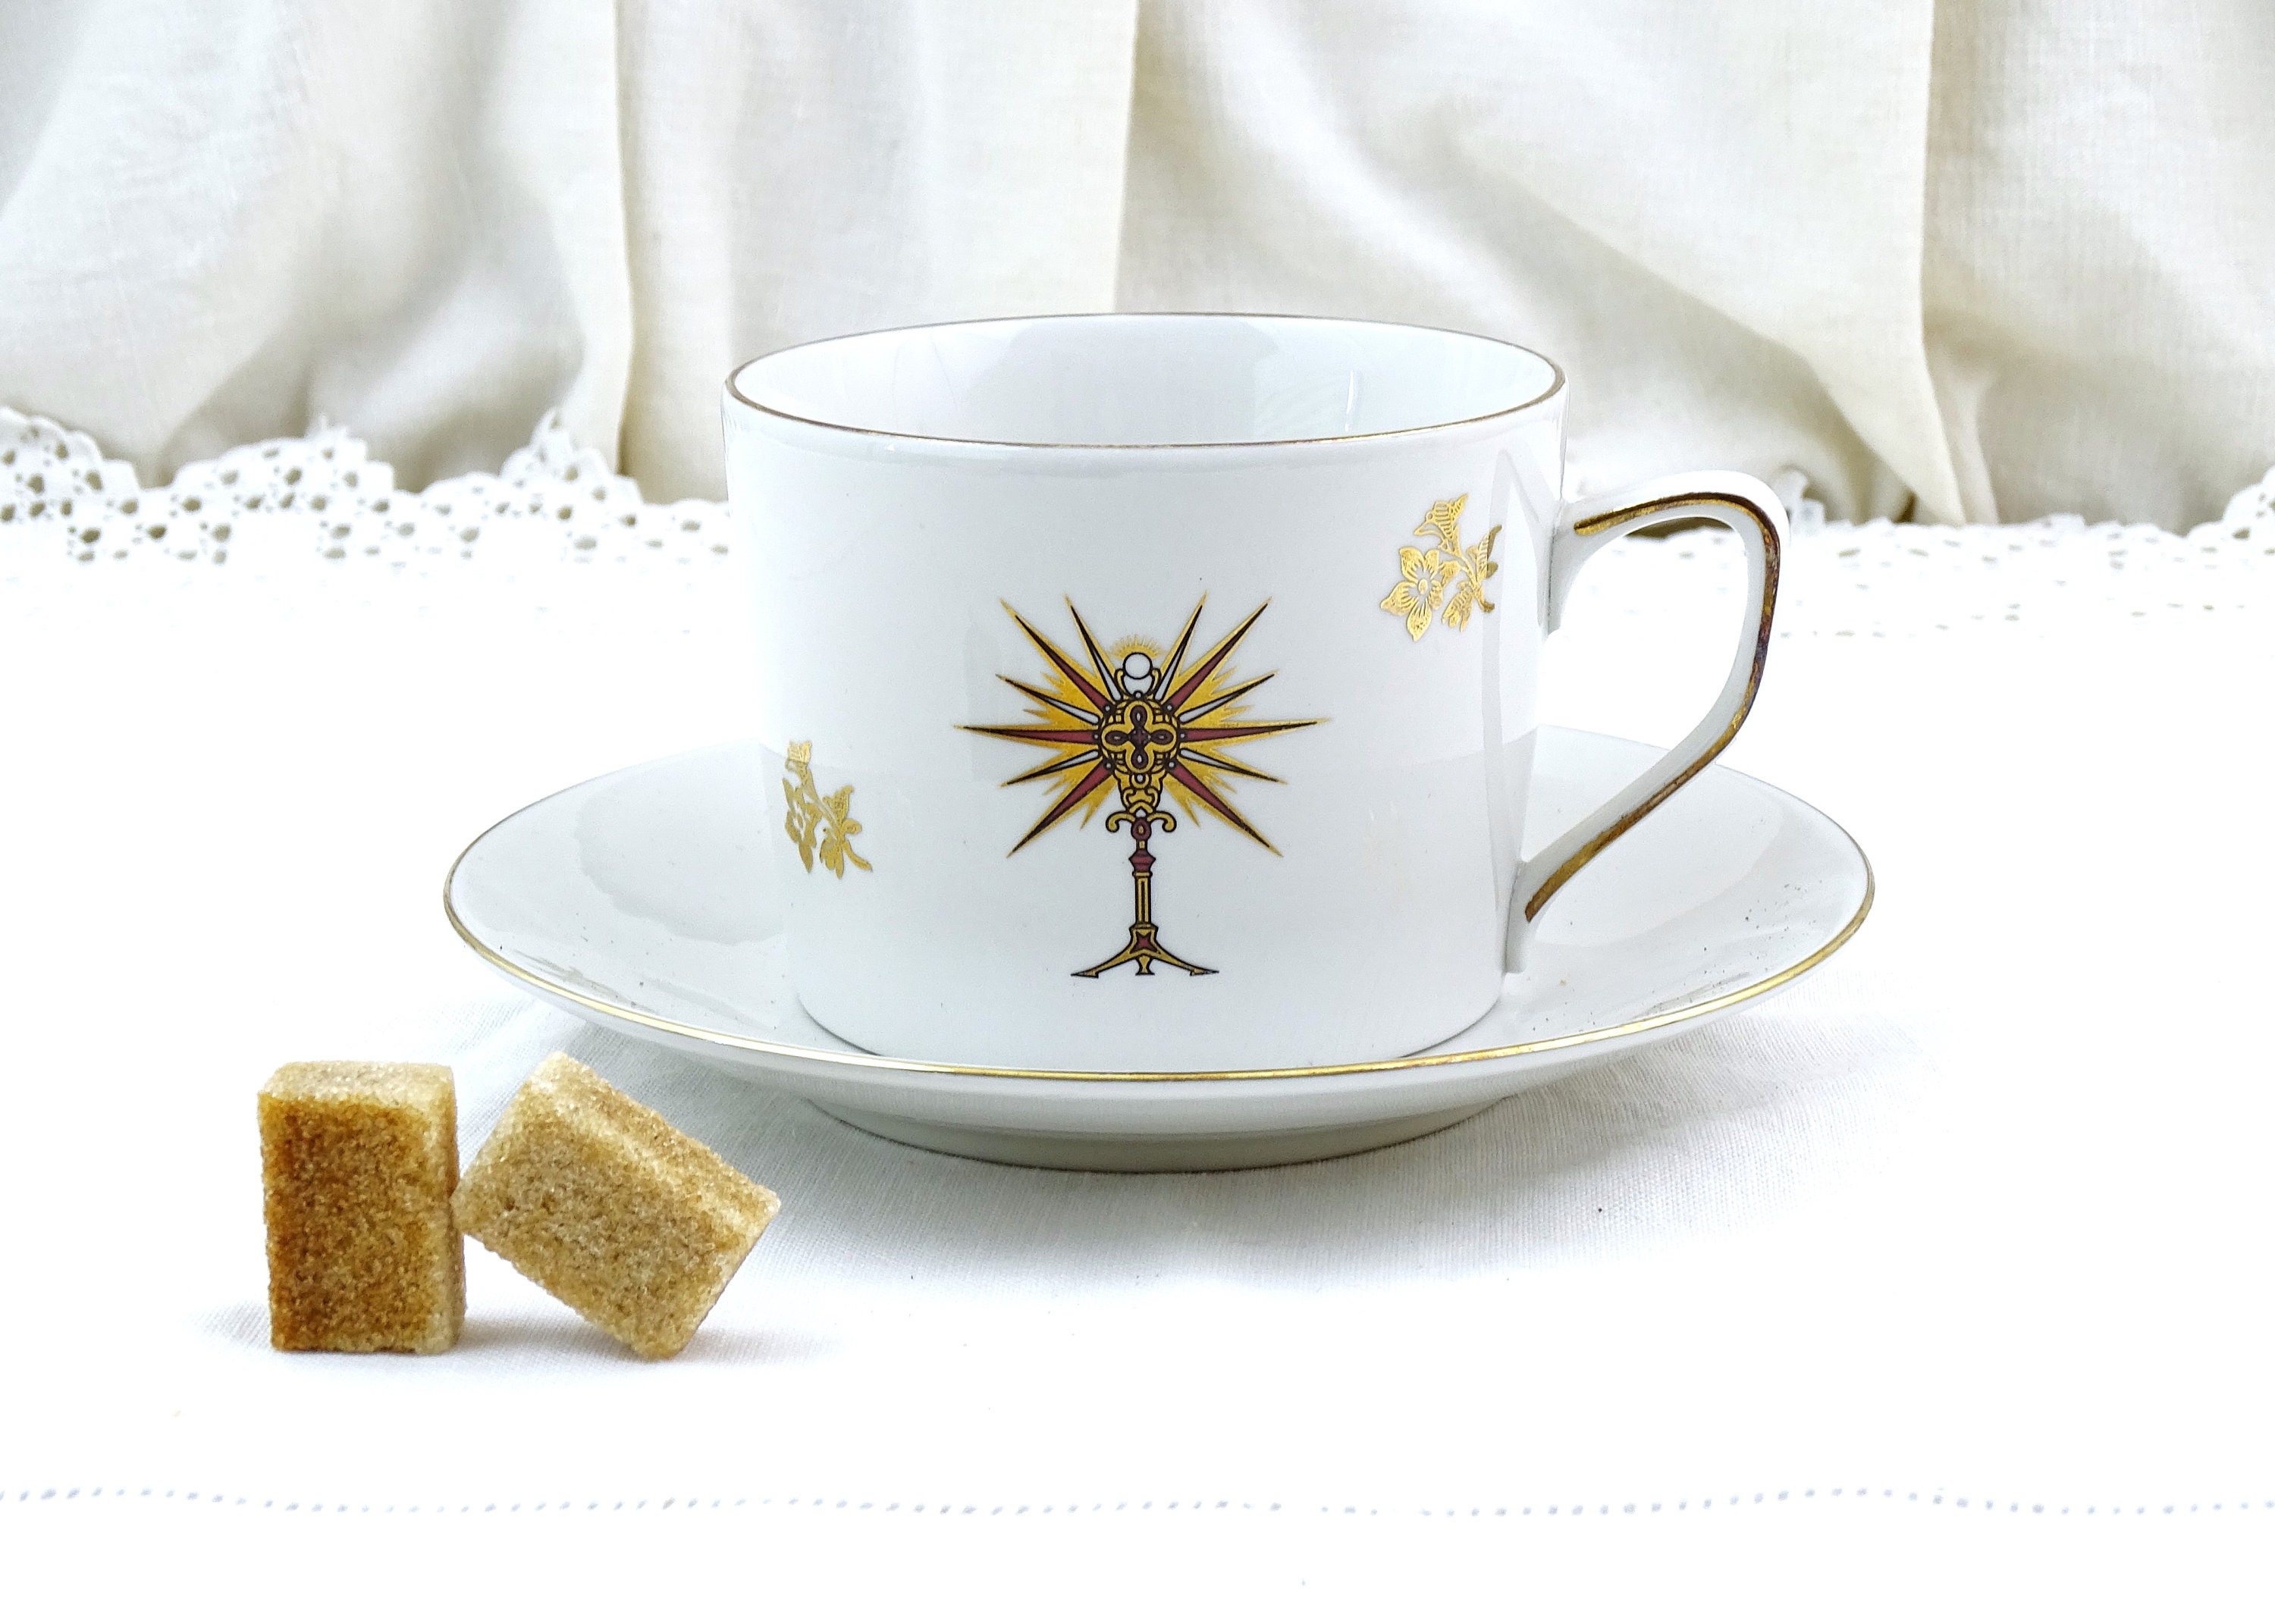 Grande Français Vintage White Ceramic Cup & Saucer With Religious Decoration in Gold, Retro Catholic